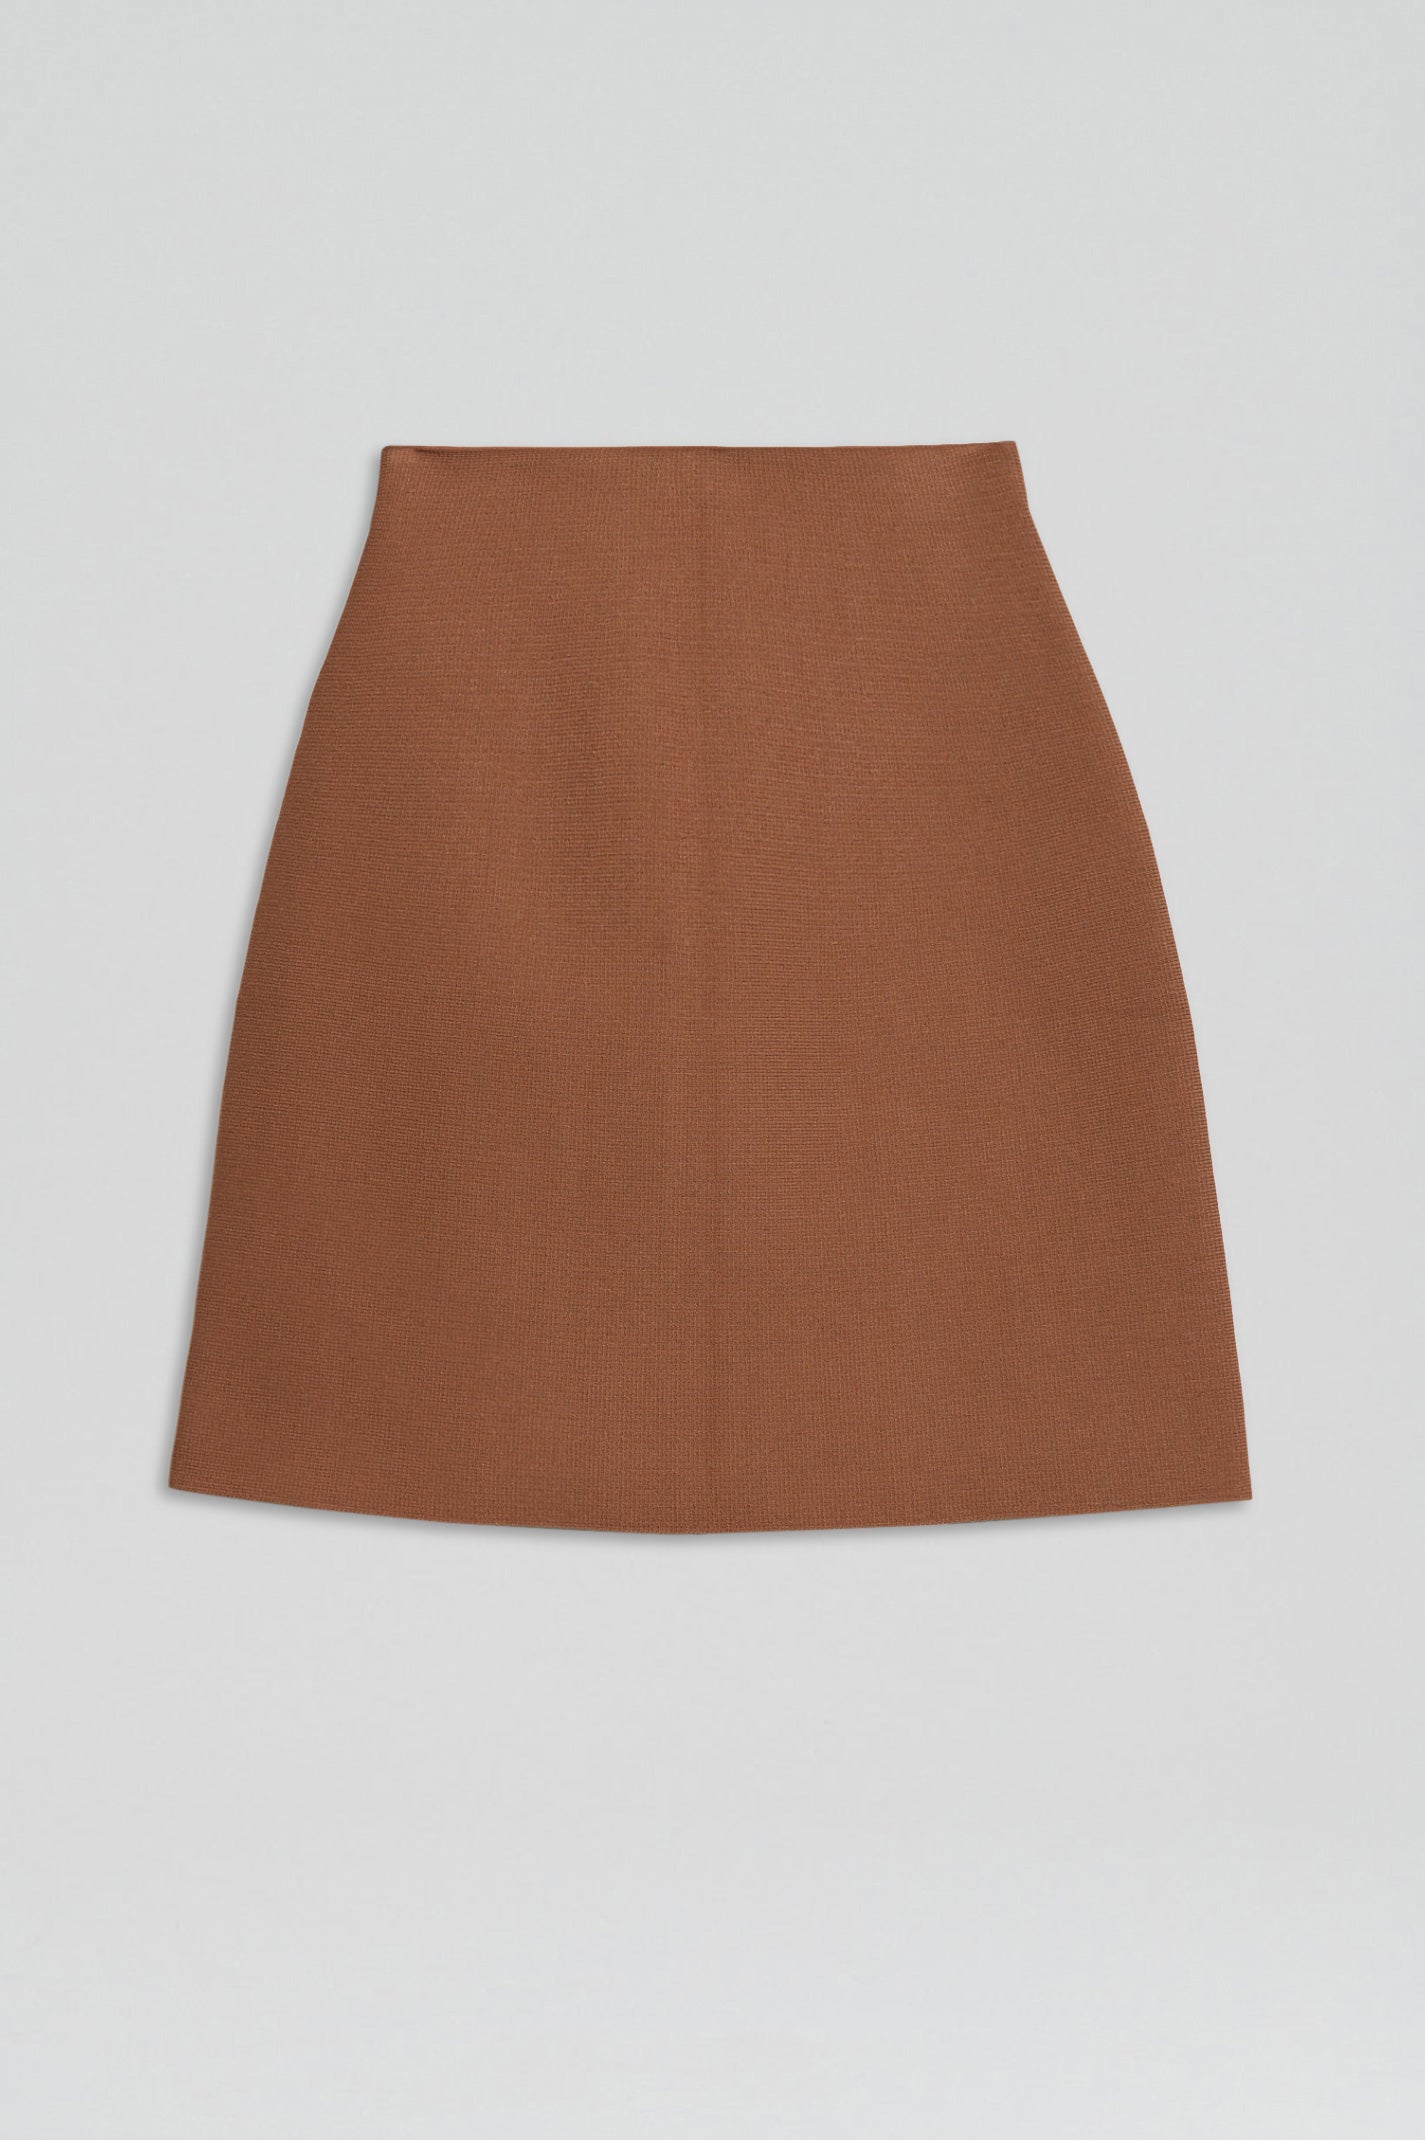 Shop Women's Skirts Online in Australia - Scanlan Theodore